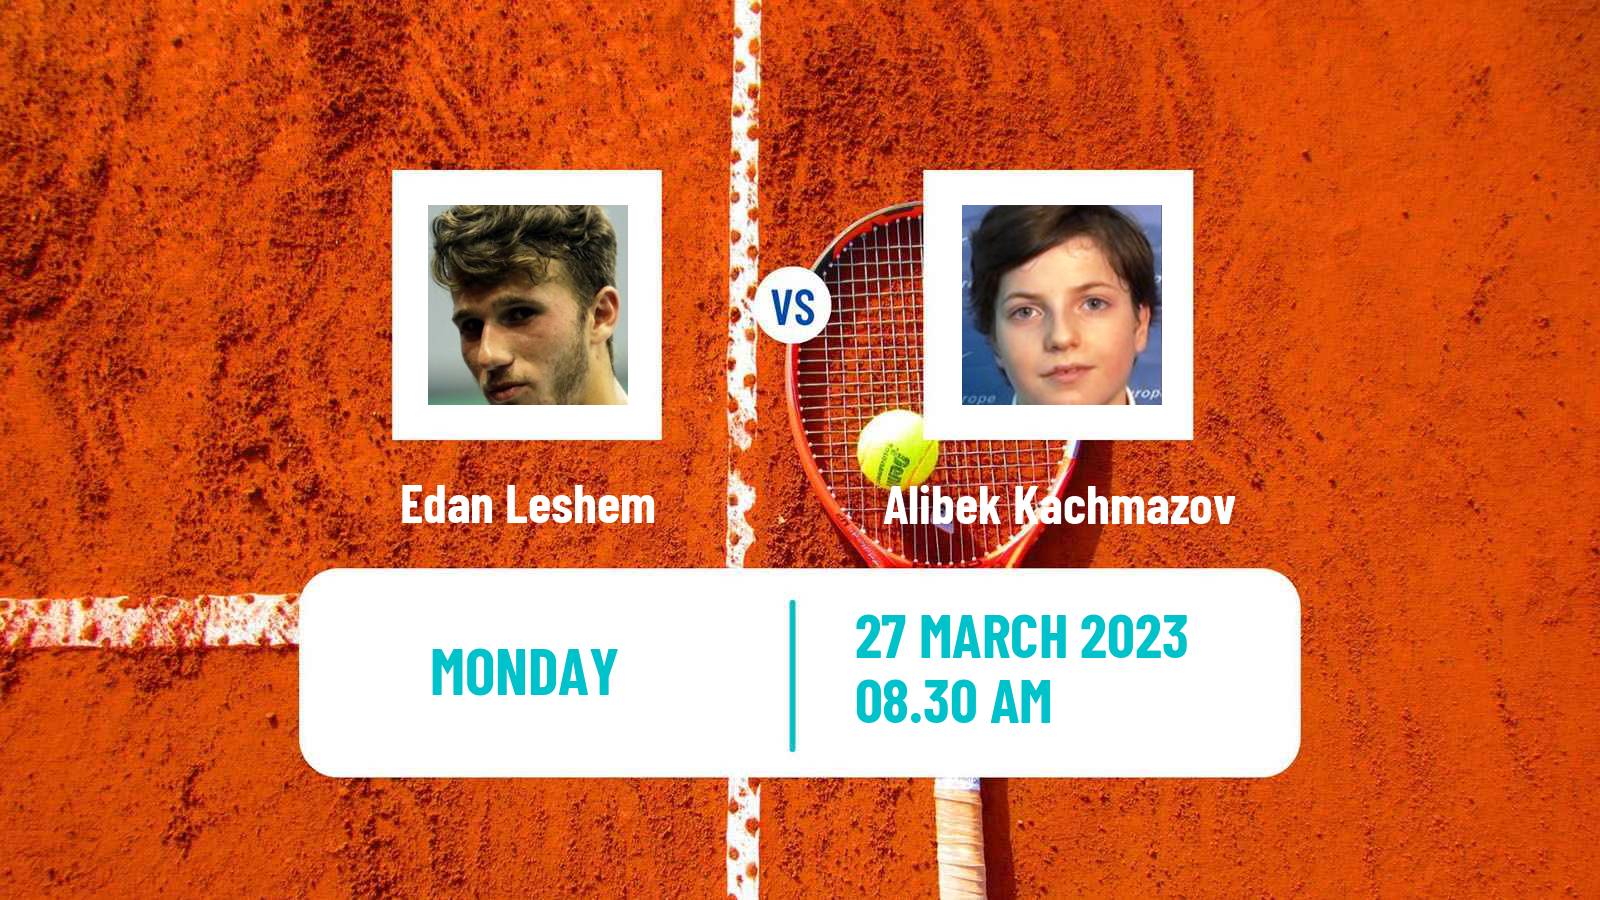 Tennis ATP Challenger Edan Leshem - Alibek Kachmazov